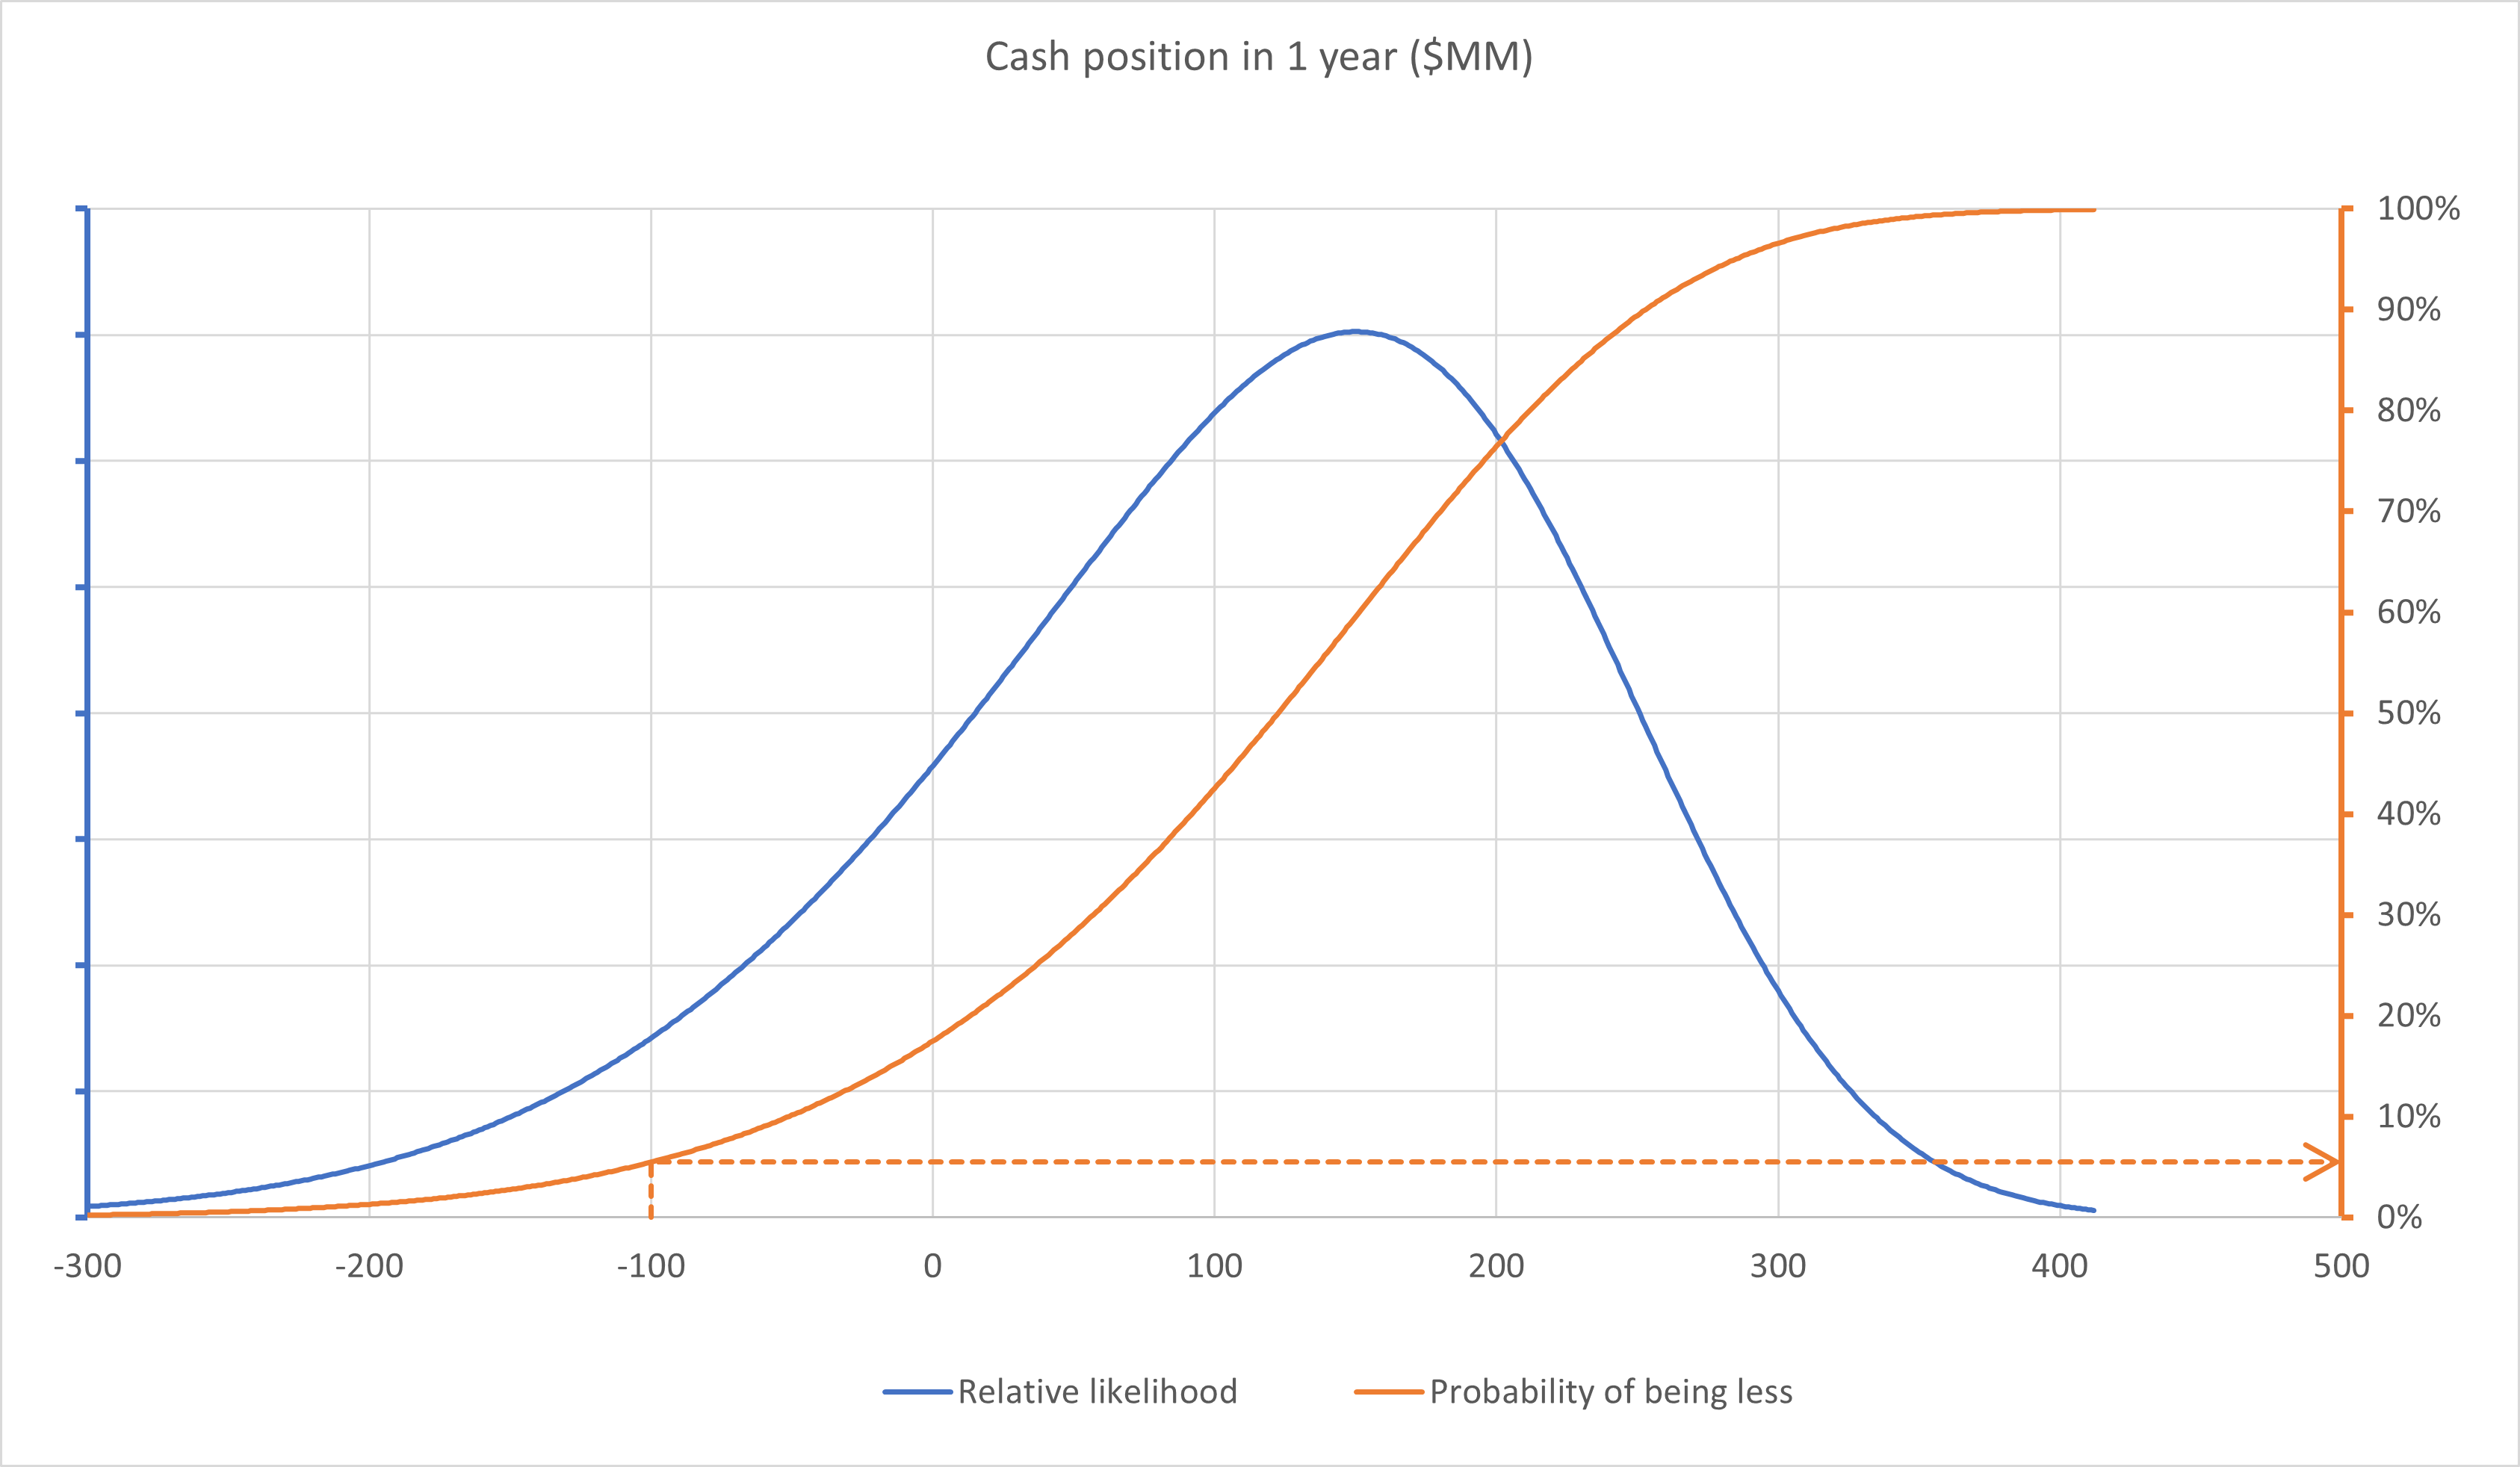 Cashflow position in one year